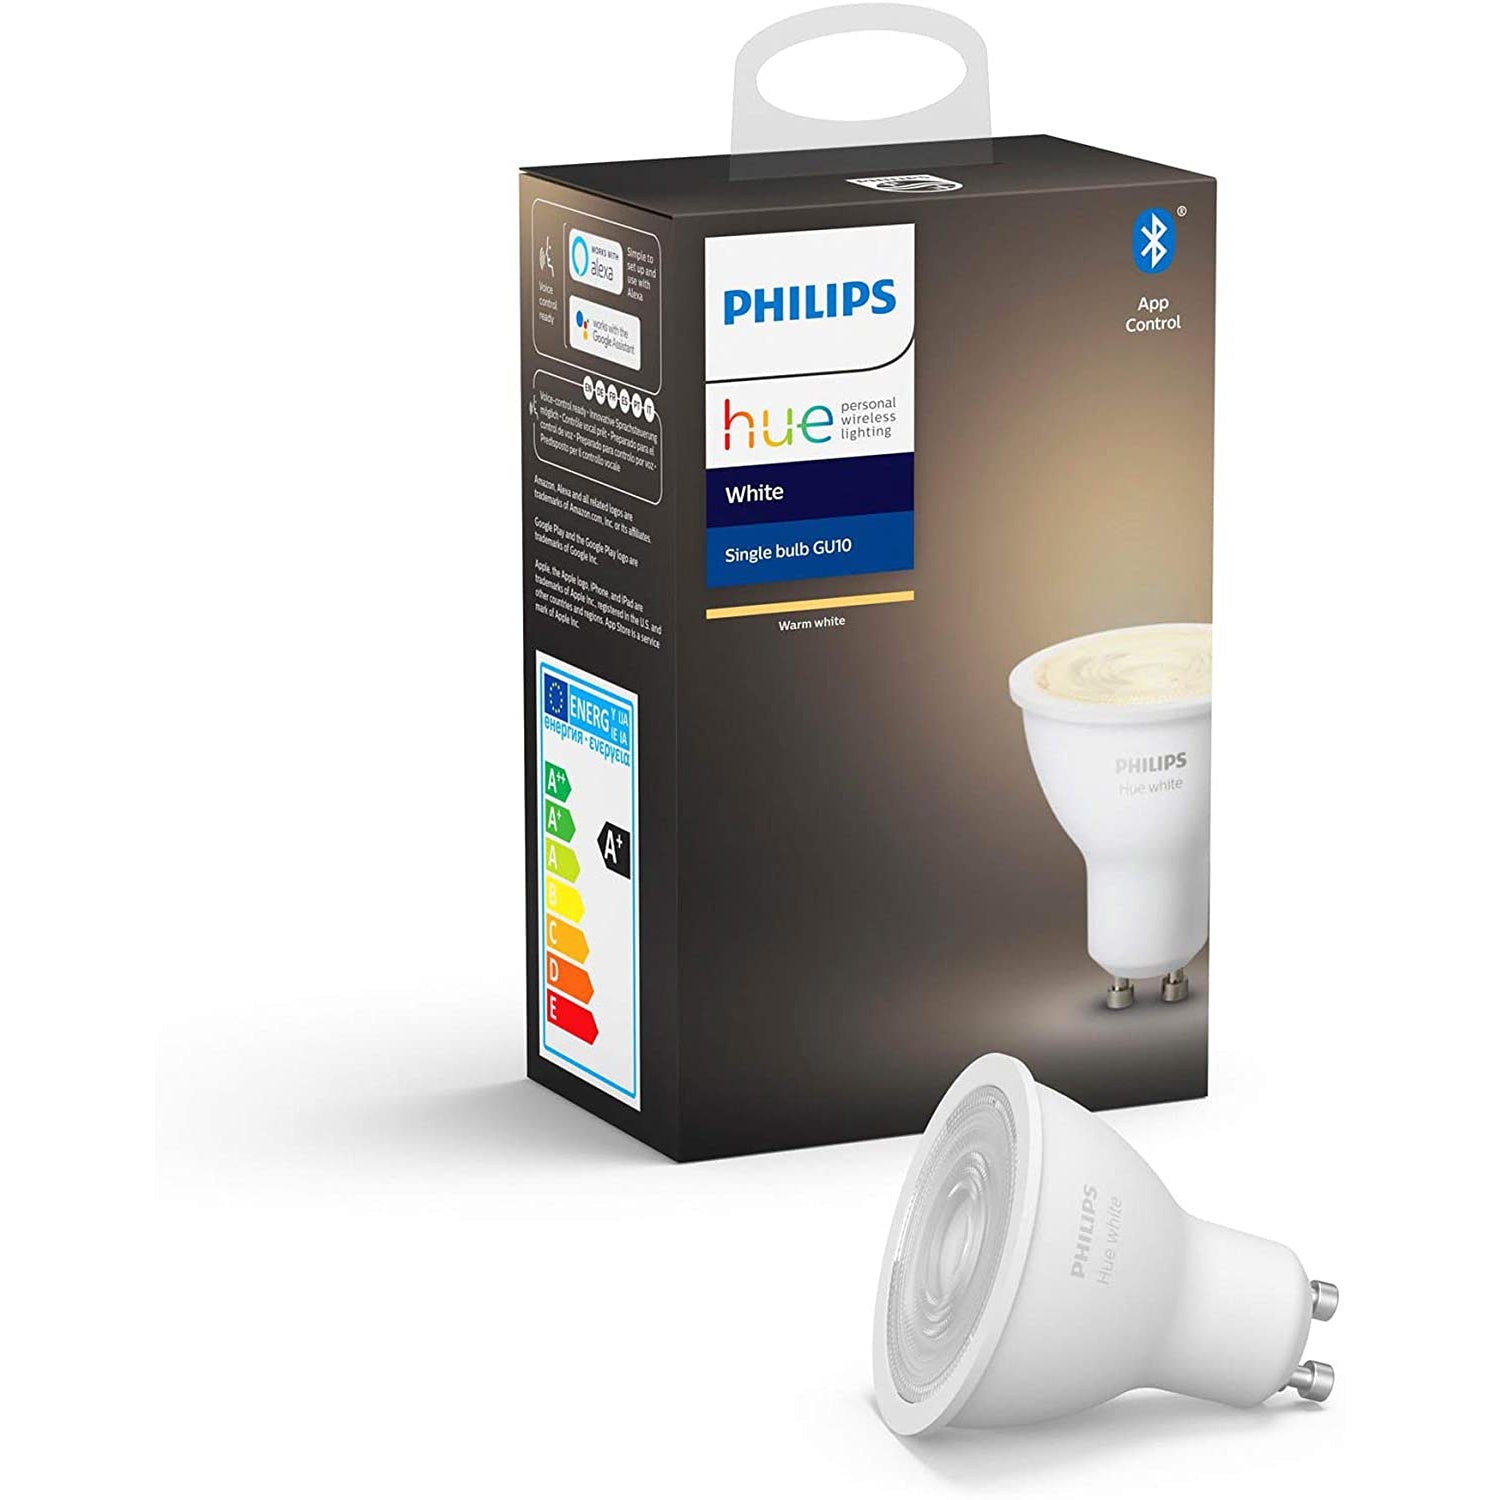 Philips Hue Single Bulb GU10 White Single Smart SpotLight Bulb LED